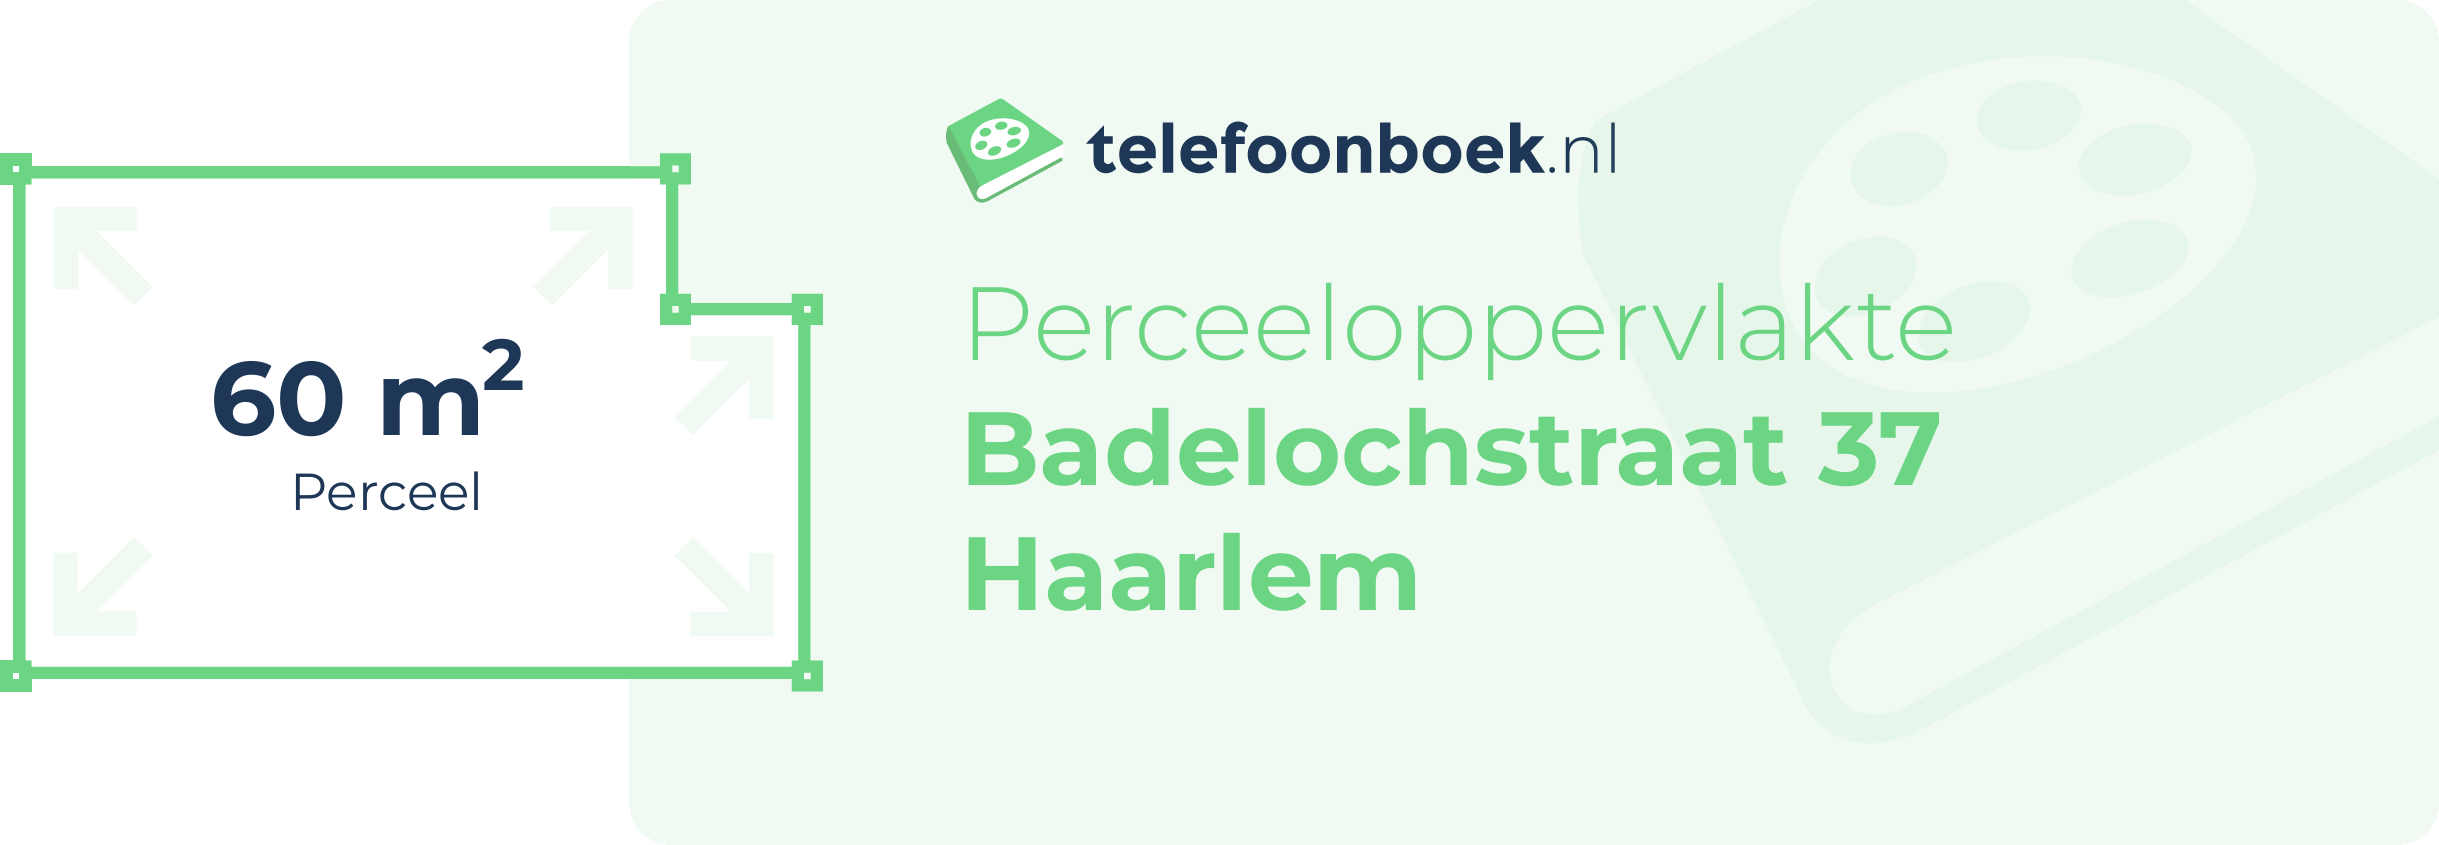 Perceeloppervlakte Badelochstraat 37 Haarlem